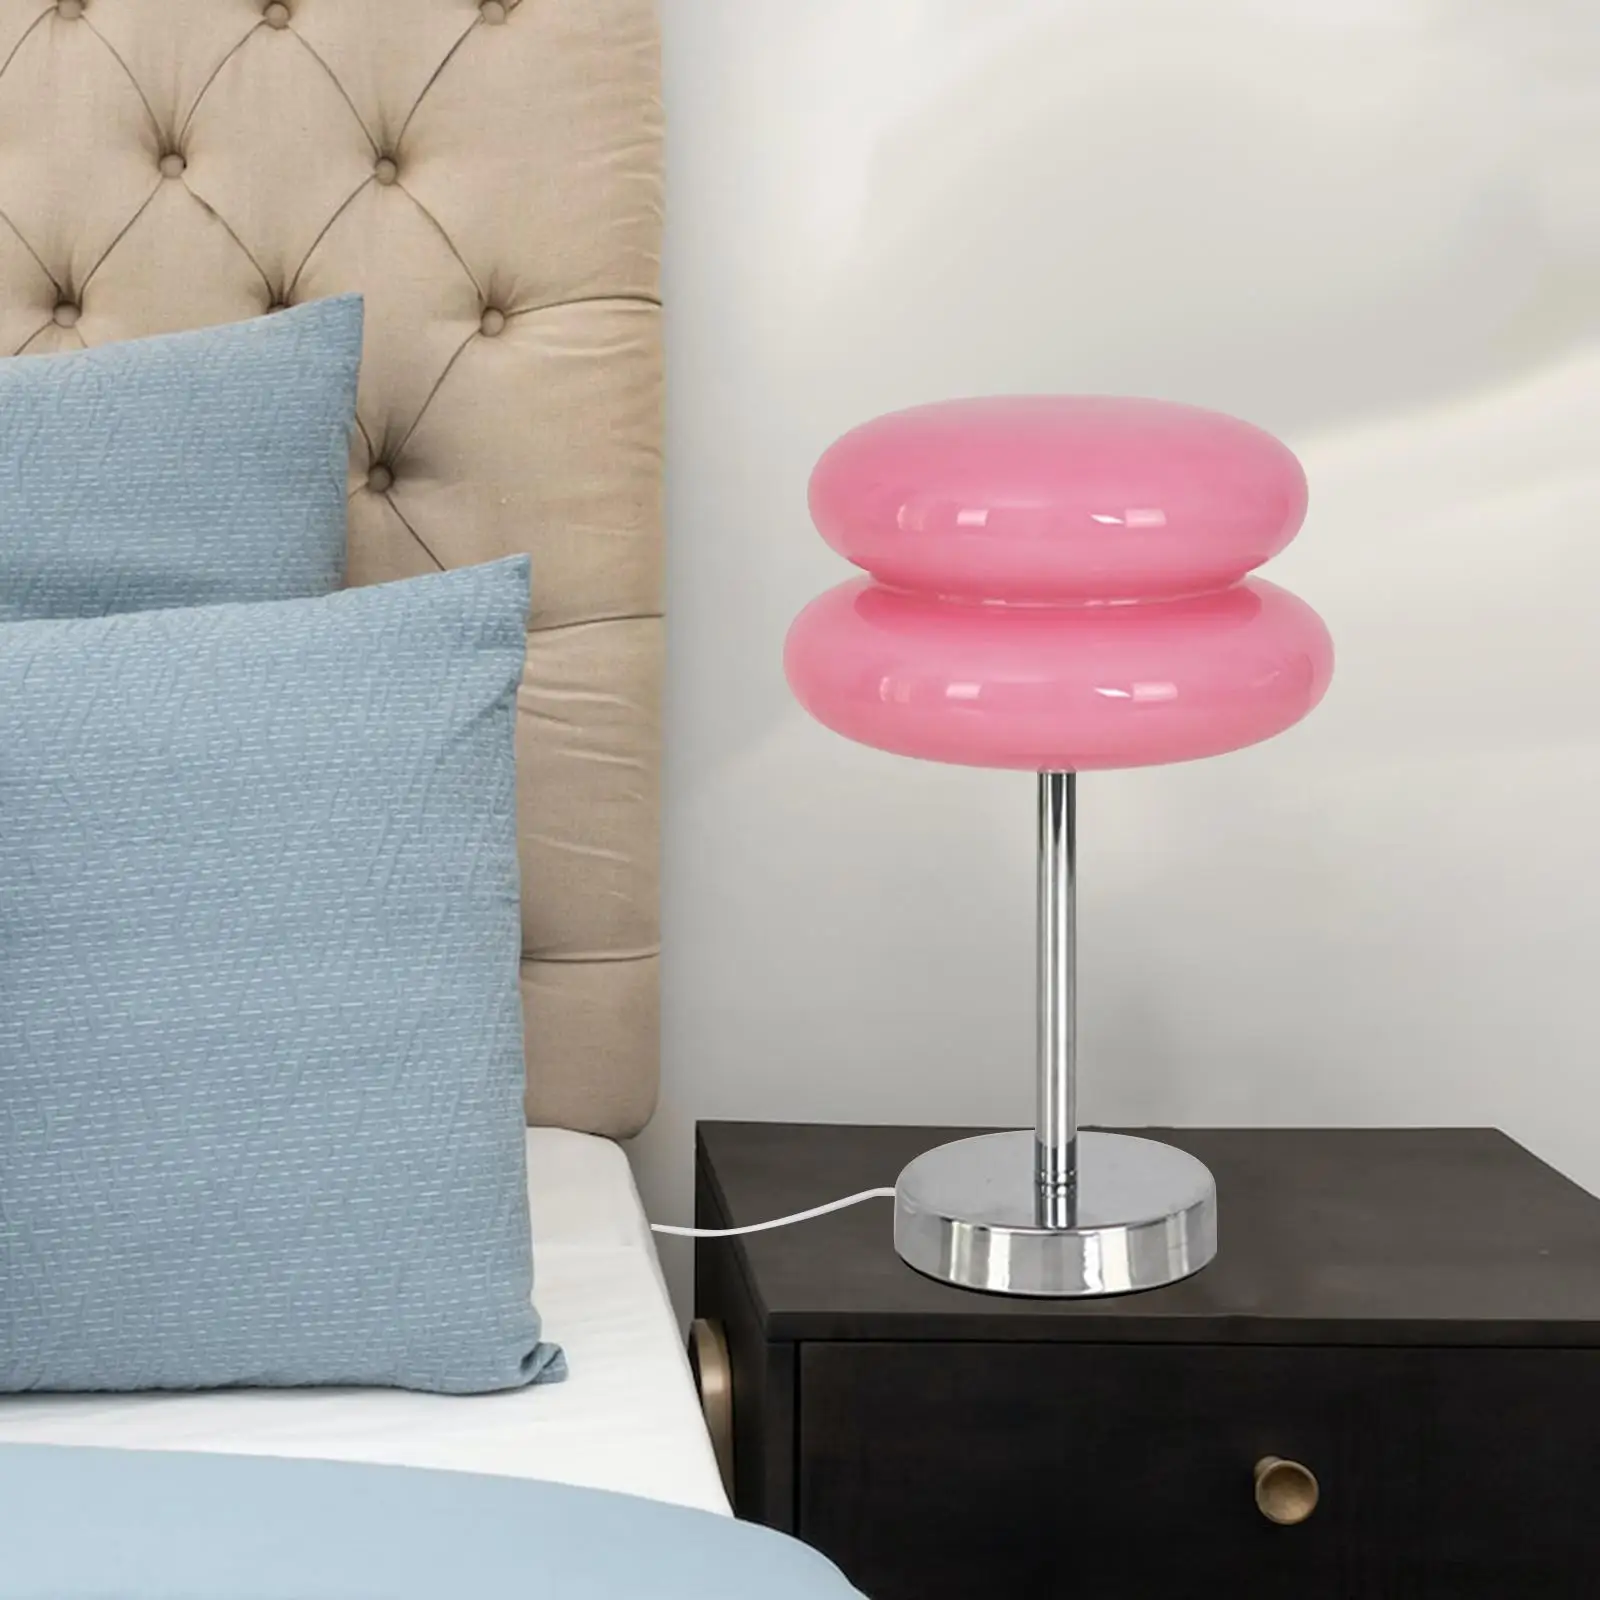 Egg Tart Mushroom Table Lamp 3 Colors Changing Night Light Study for Bedroom